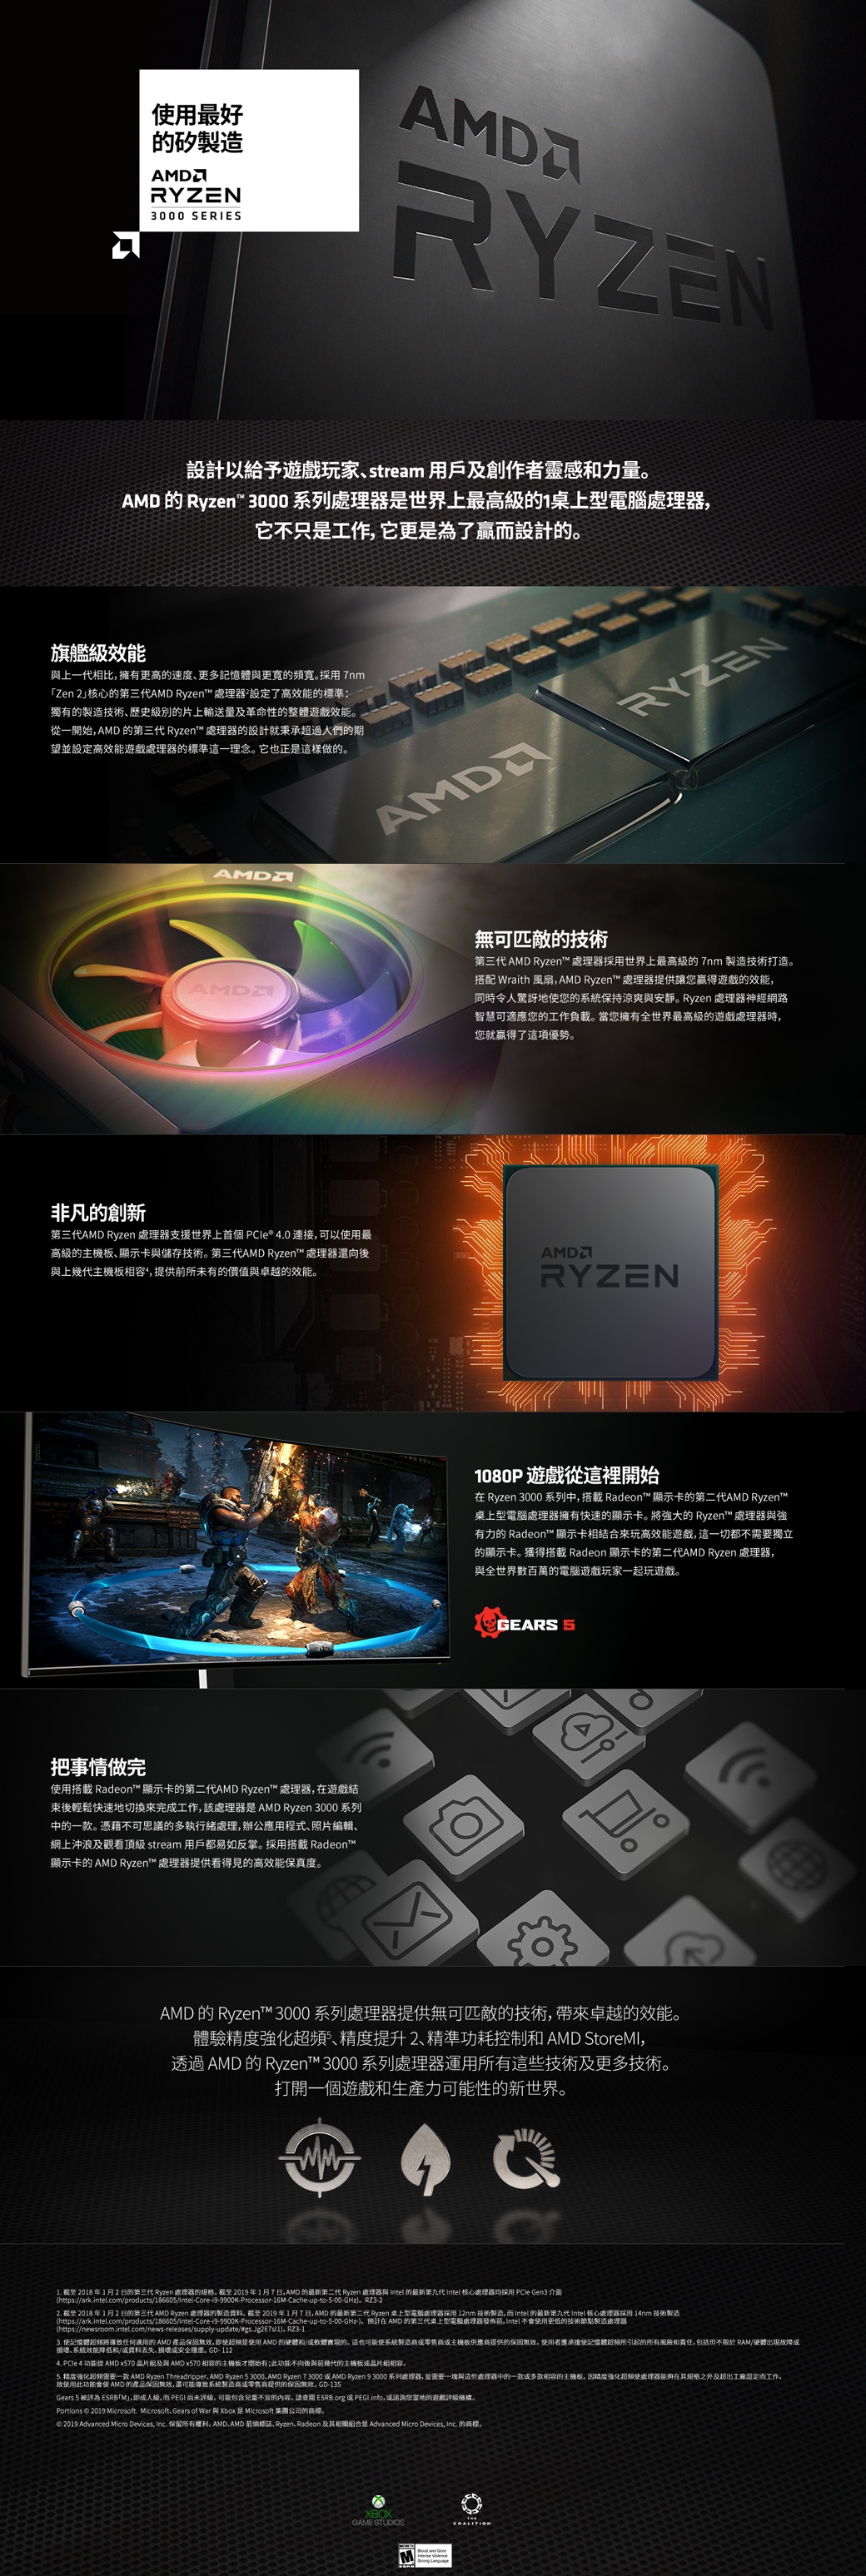 AMD Ryzen5 3600X + MSI X570 組合套餐